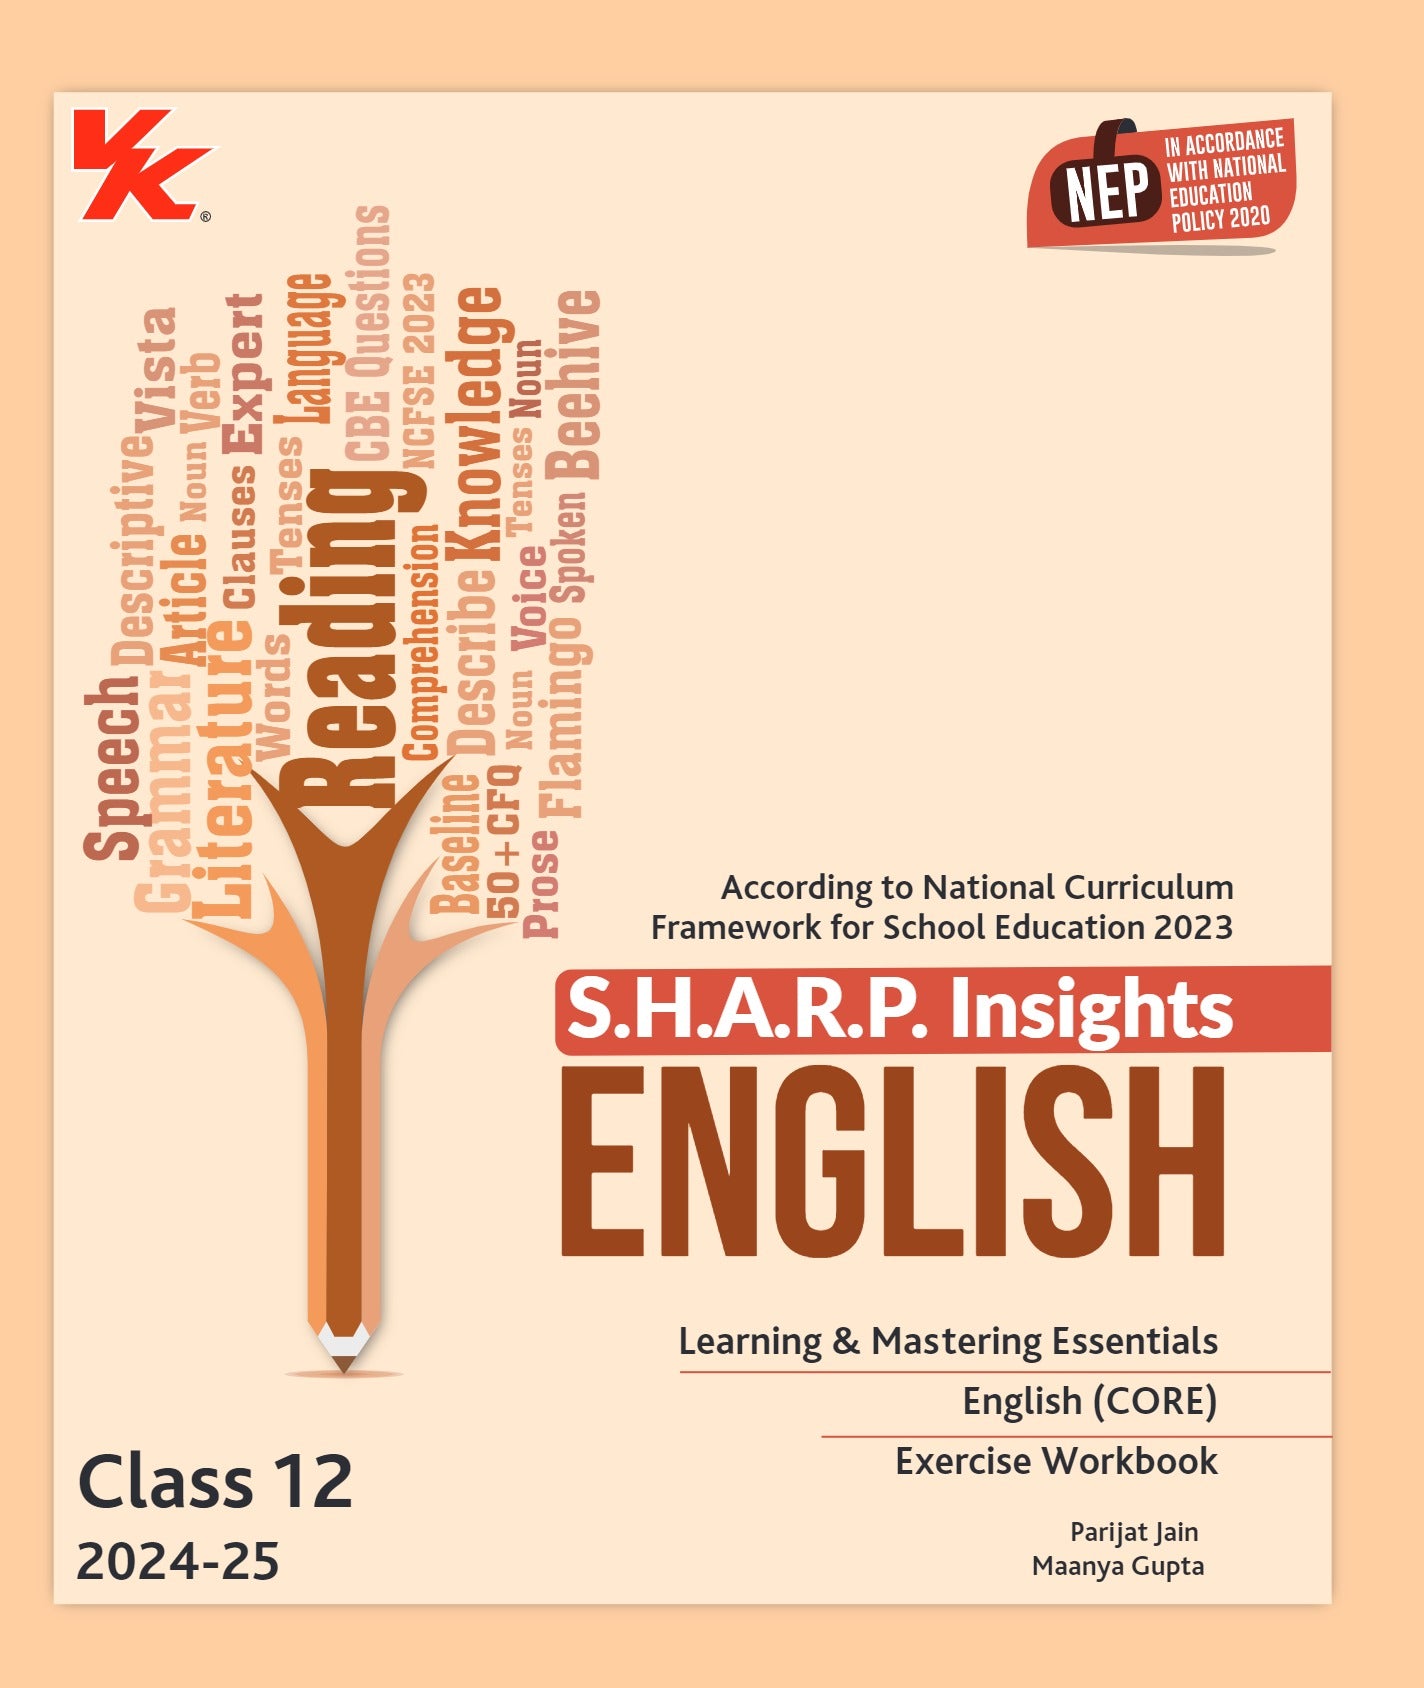 S.H.A.R.P. Insights for English (CORE) Exercise Workbook for Class 12 CBSE 2024-25 by Parijat Jain (IIT-D, IIM-A) & Maanya Gupta (IIM-A)